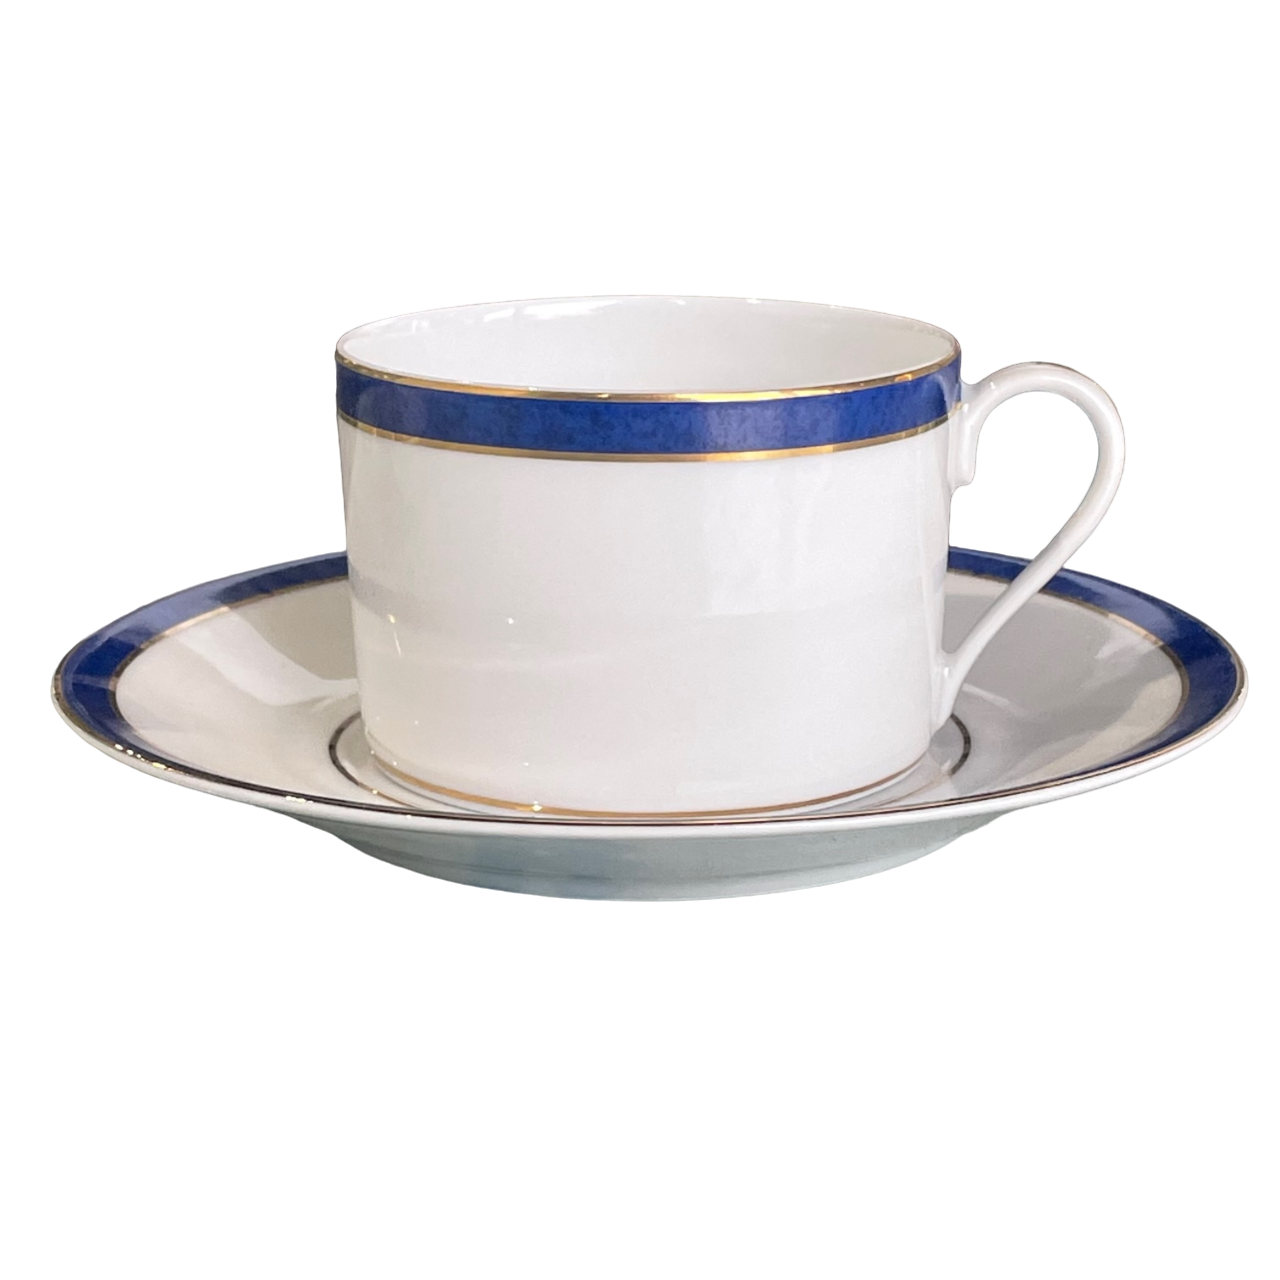 Dune blue - Tea cup and saucer 0.20 litre